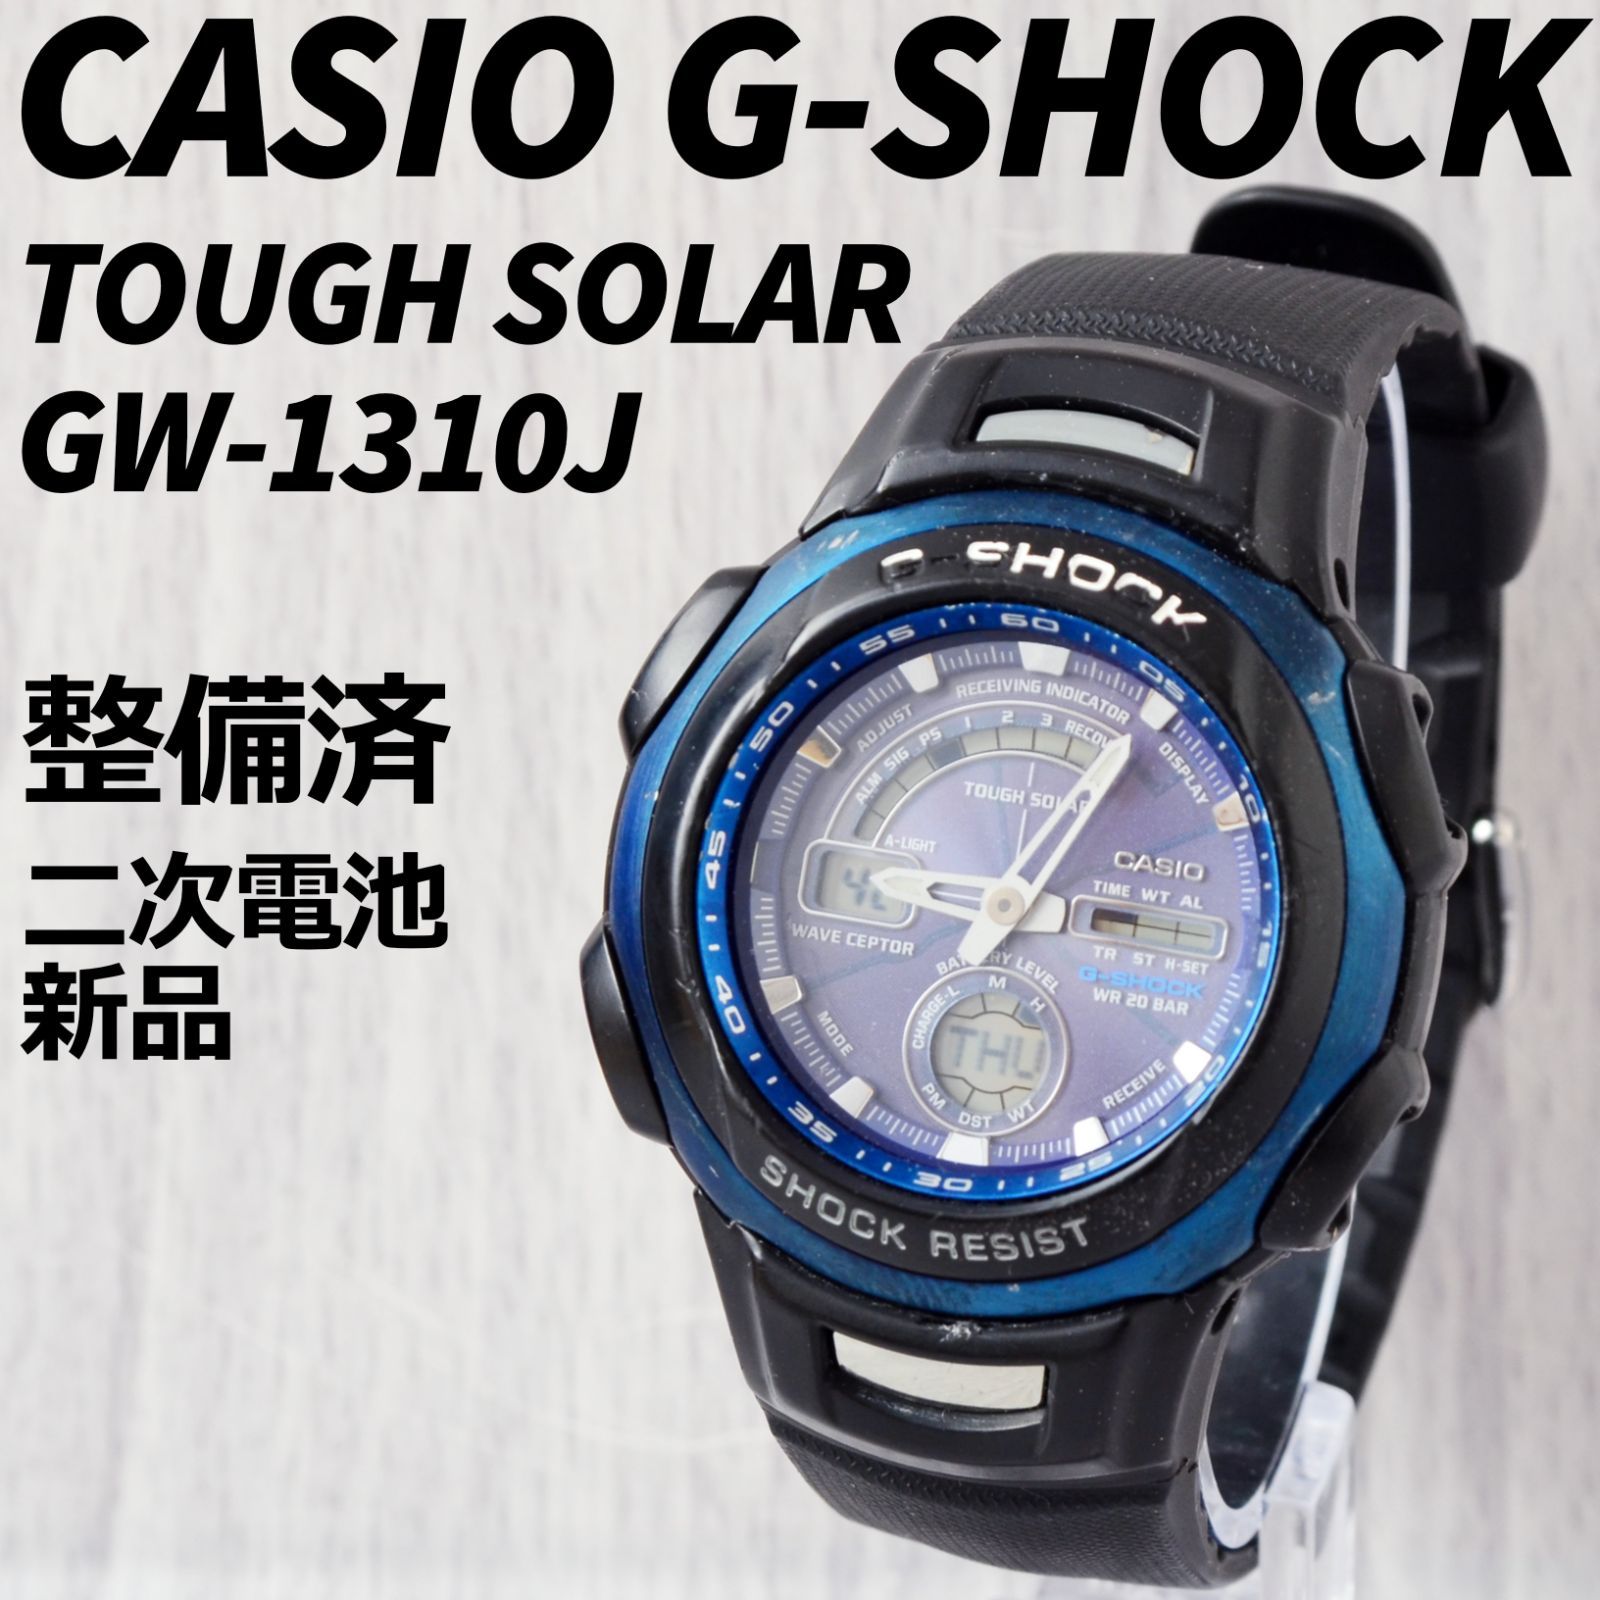 CASIO G-SHOCK SHOCK RESIST - 時計